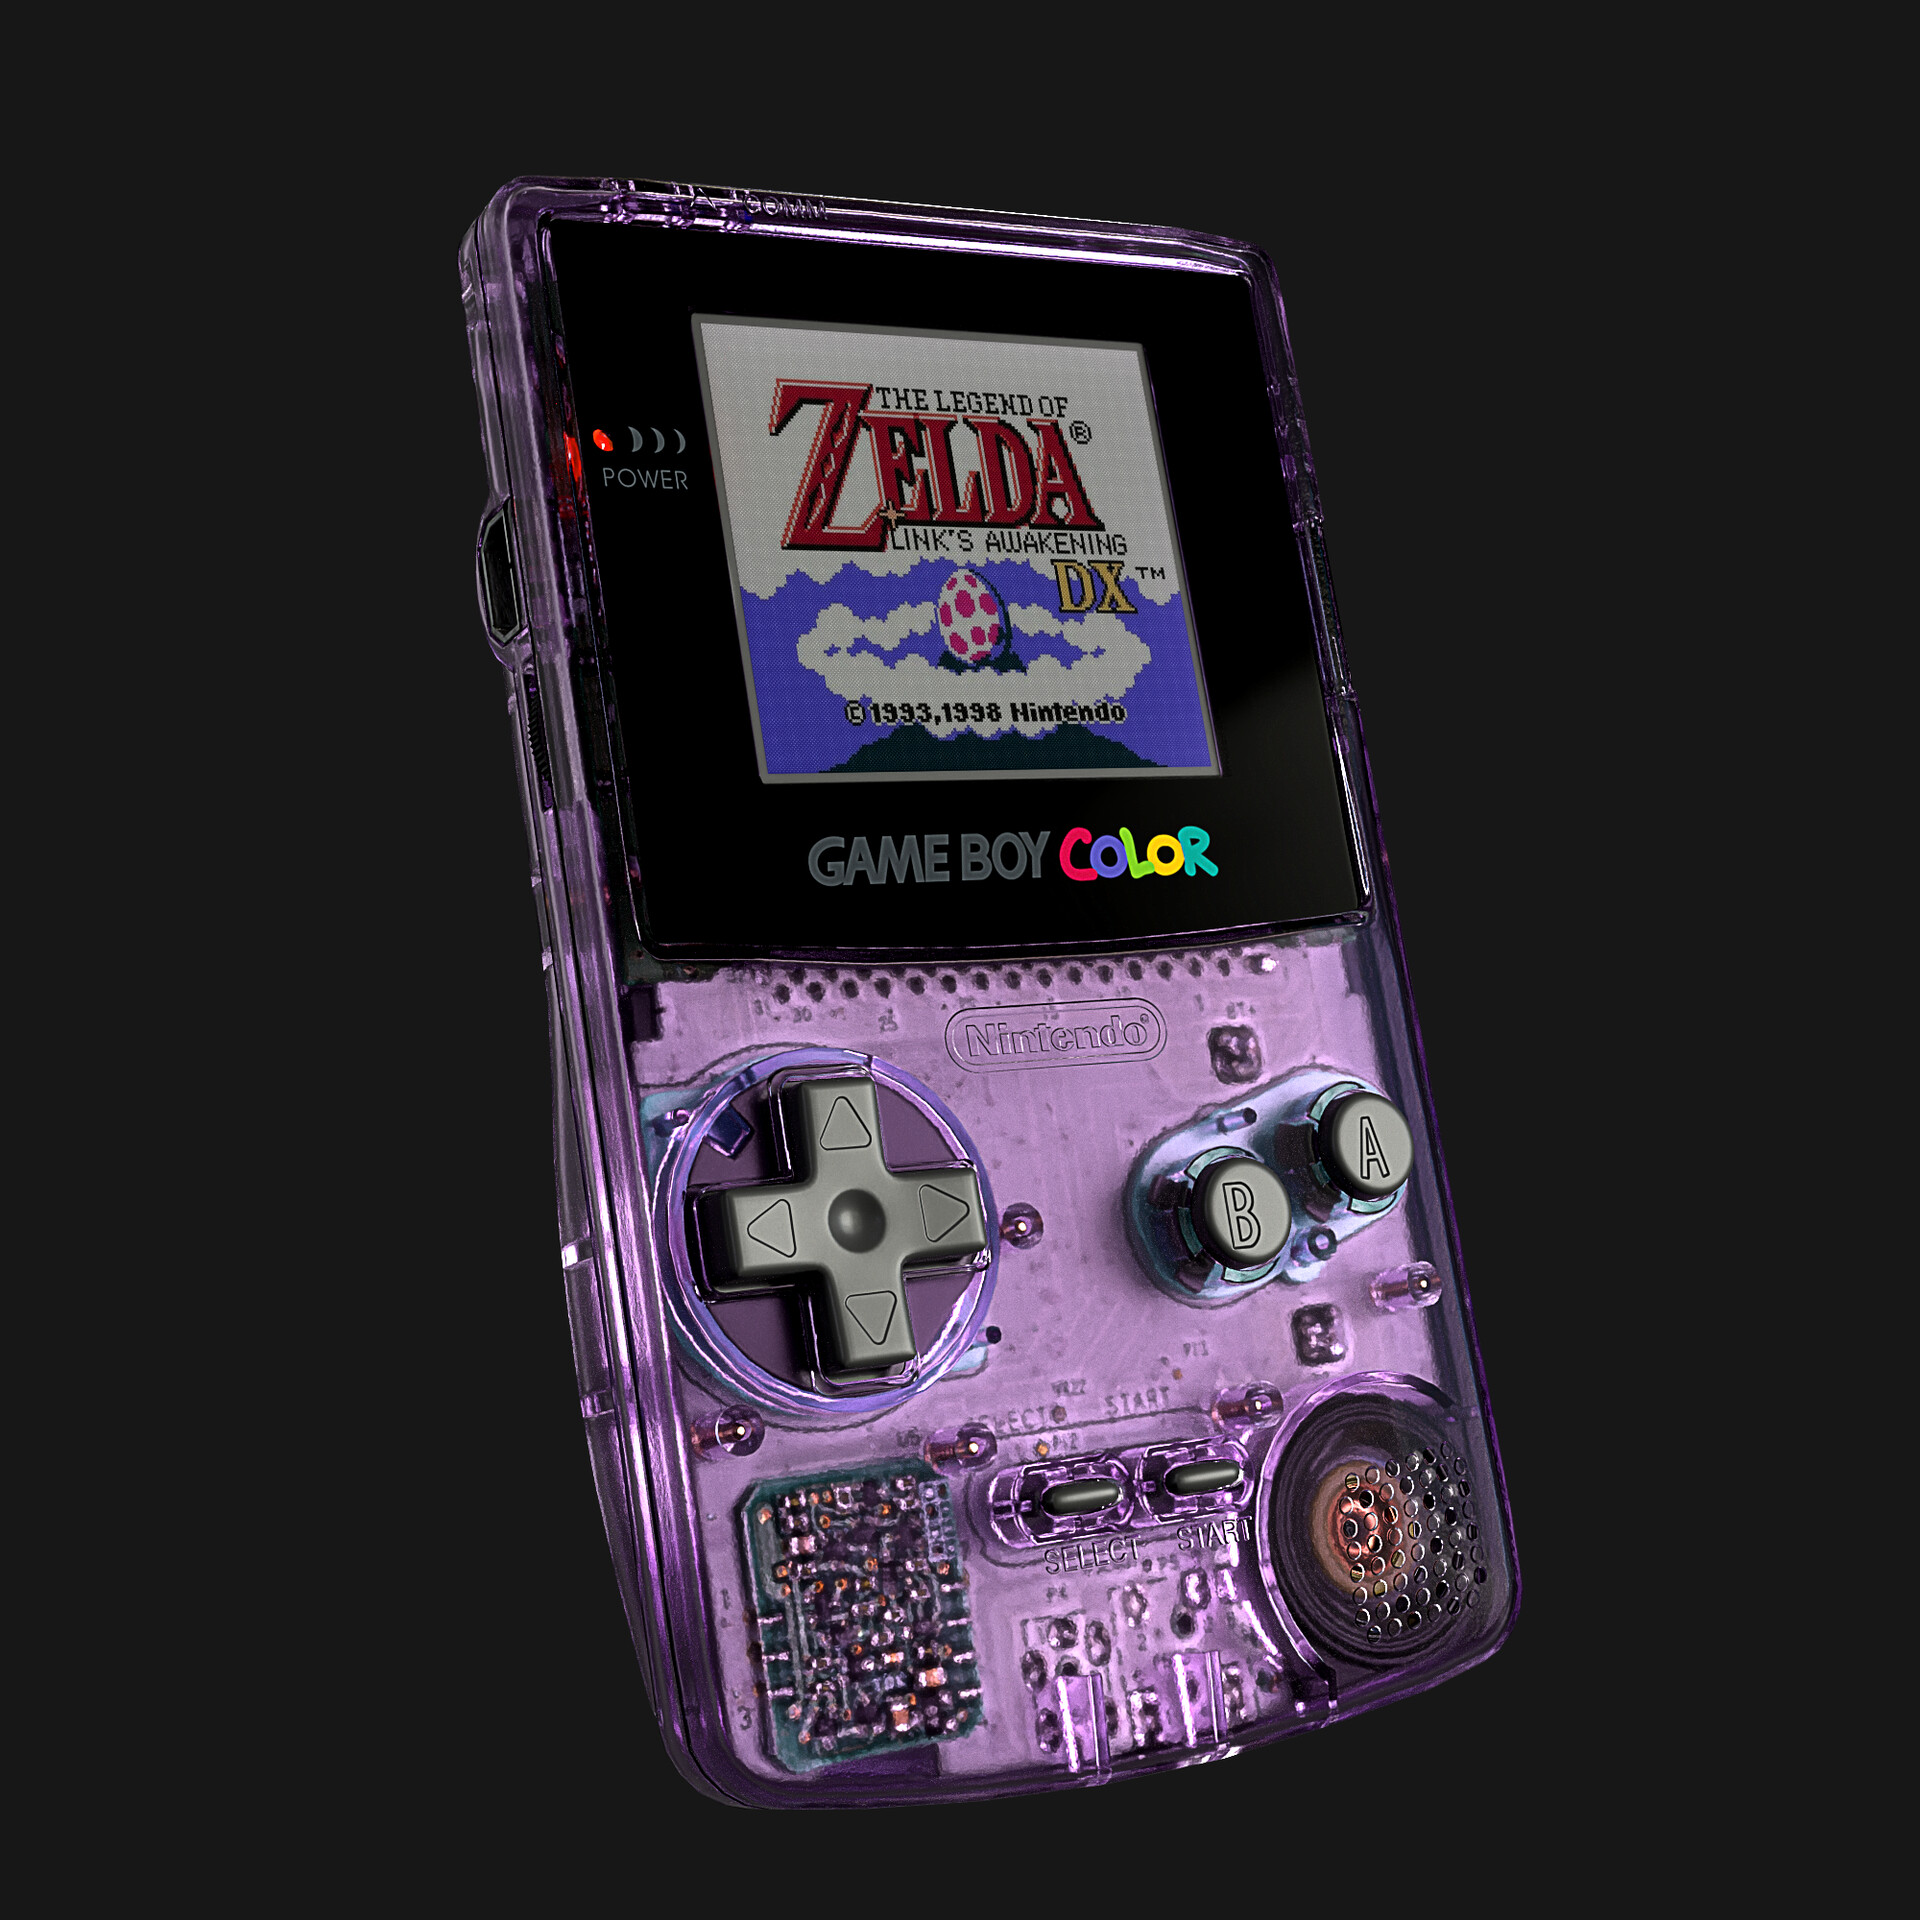 Legend of Zelda: Link's Awakening (Nintendo Game Boy, 1998) for